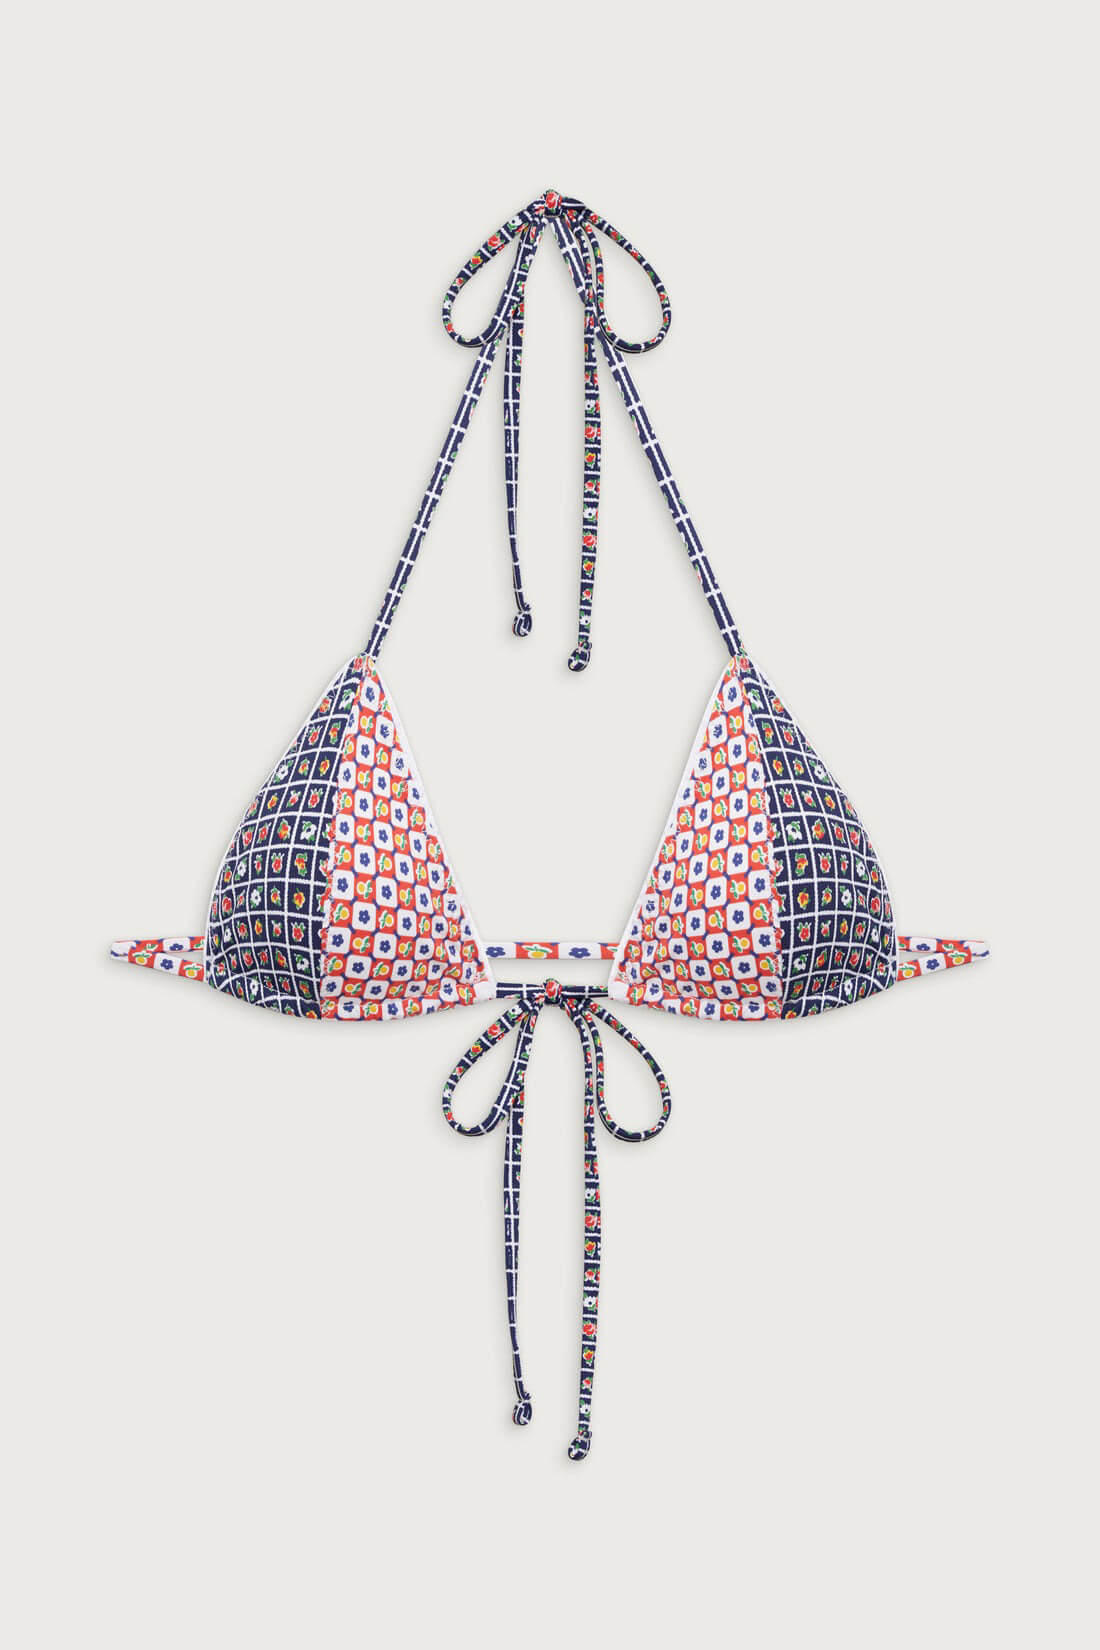 Frankies Bikinis coastal triangle top in farmhouse florals